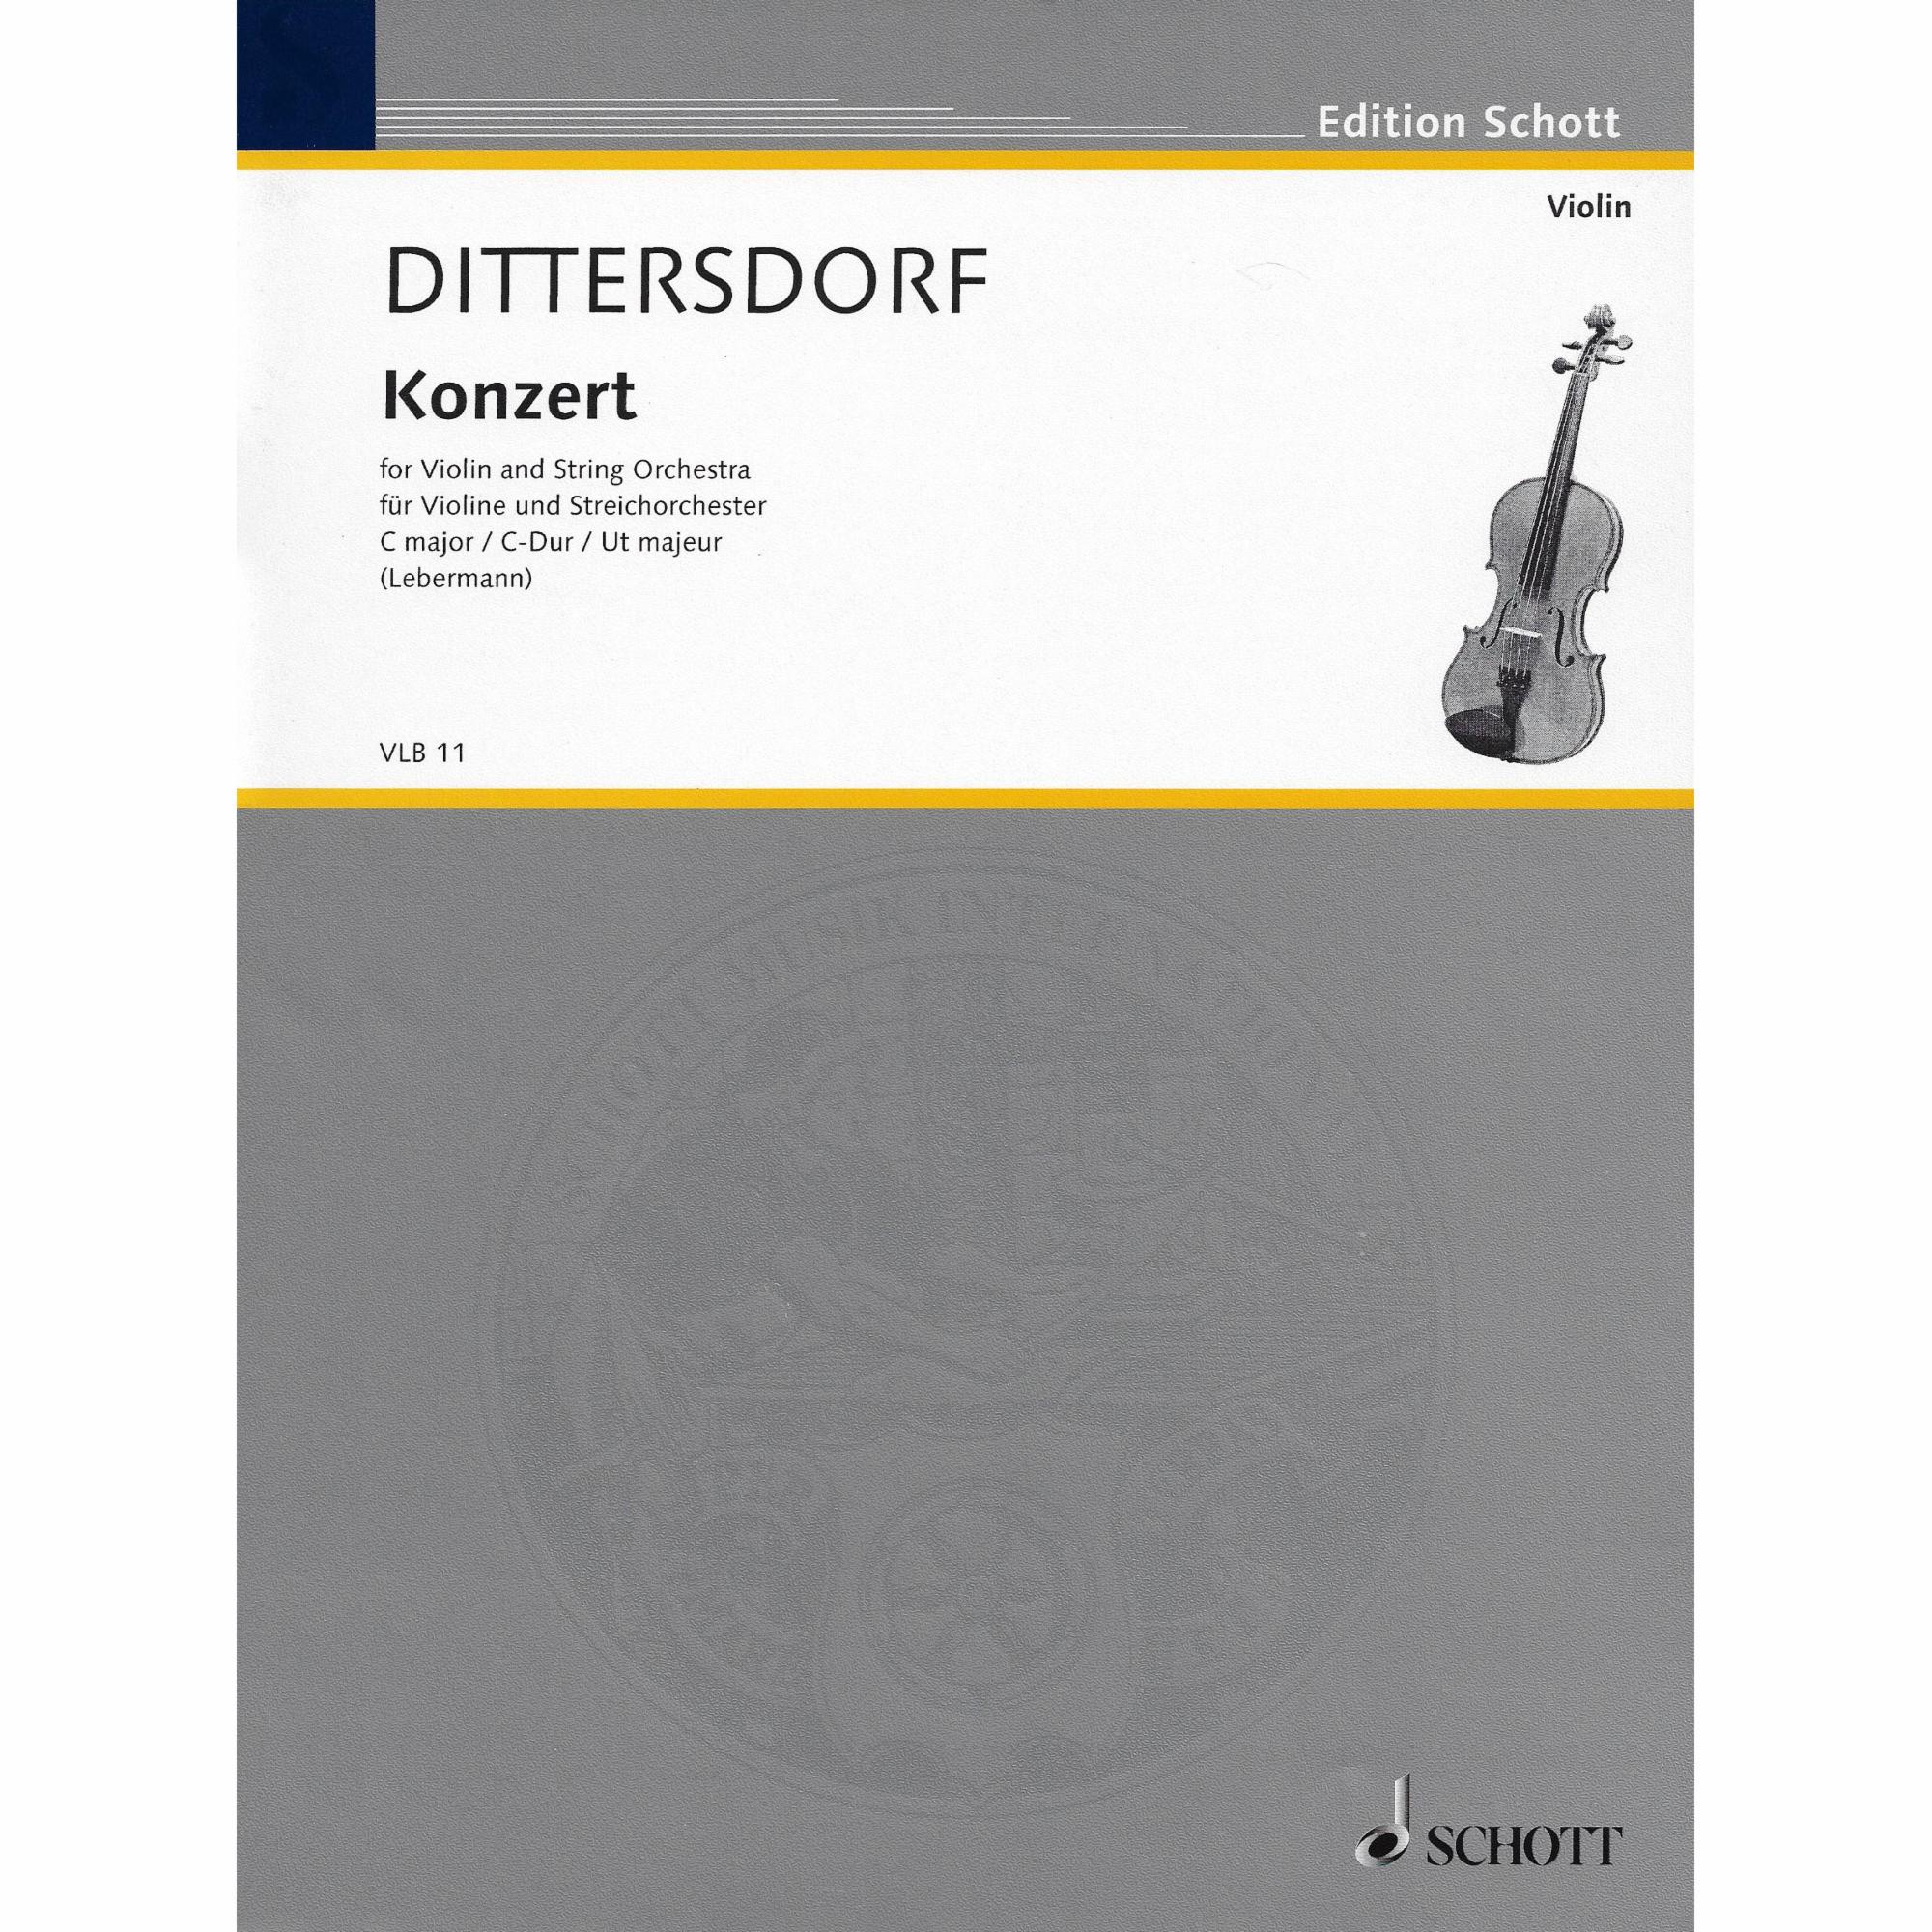 Dittersdorf -- Concerto in C Major for Violin and Piano